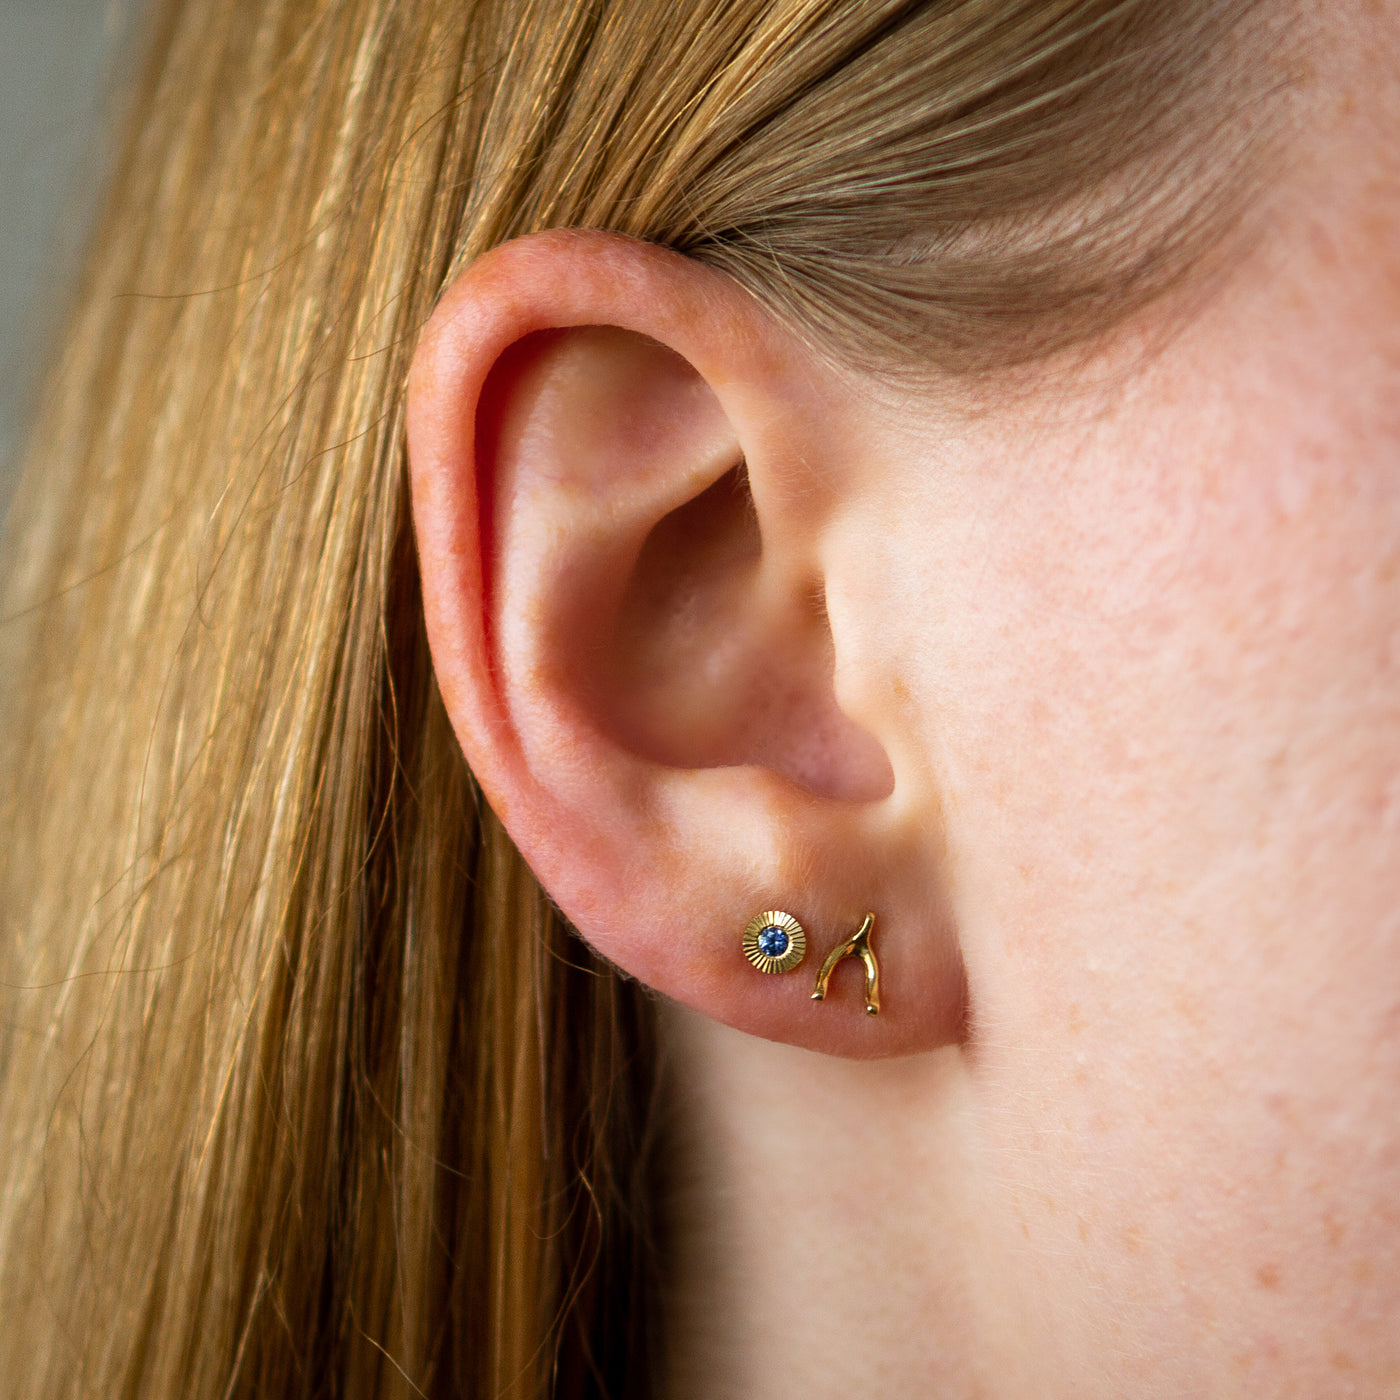 Gold and blue yogo sapphire aurora stud earrings with gold wishbone stud earrings on an ear